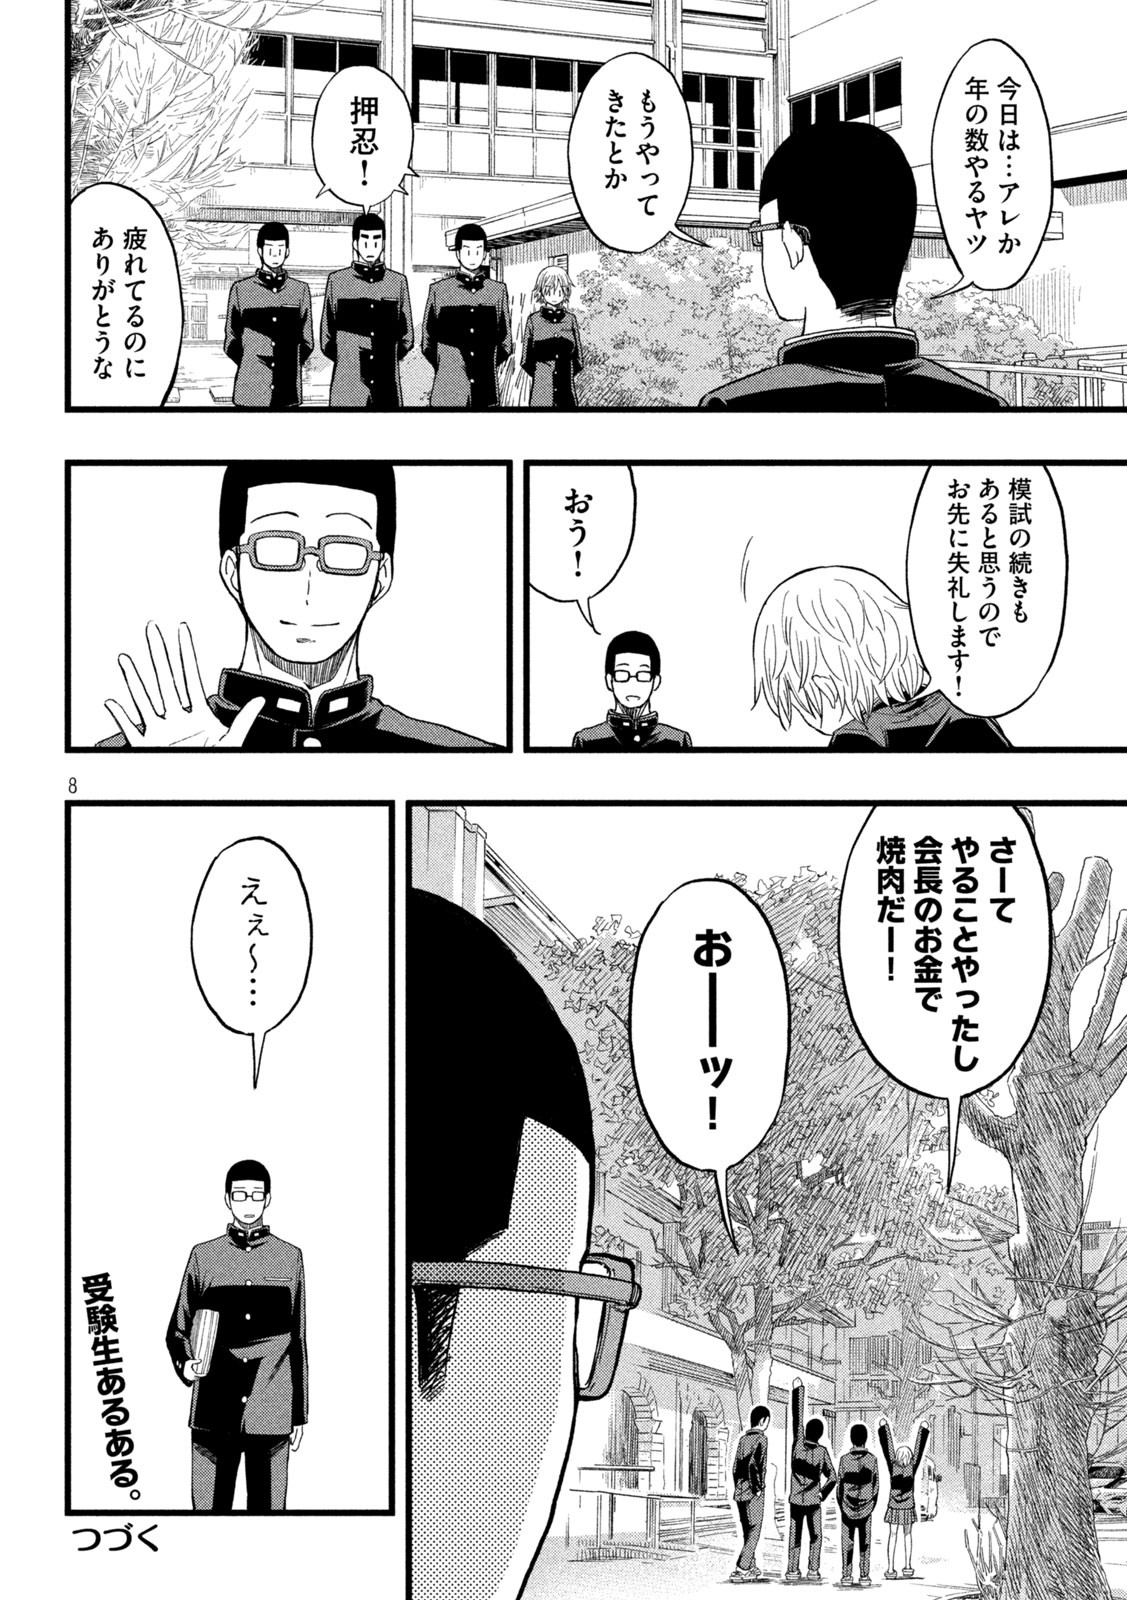 Koharu haru! - Chapter 81 - Page 4